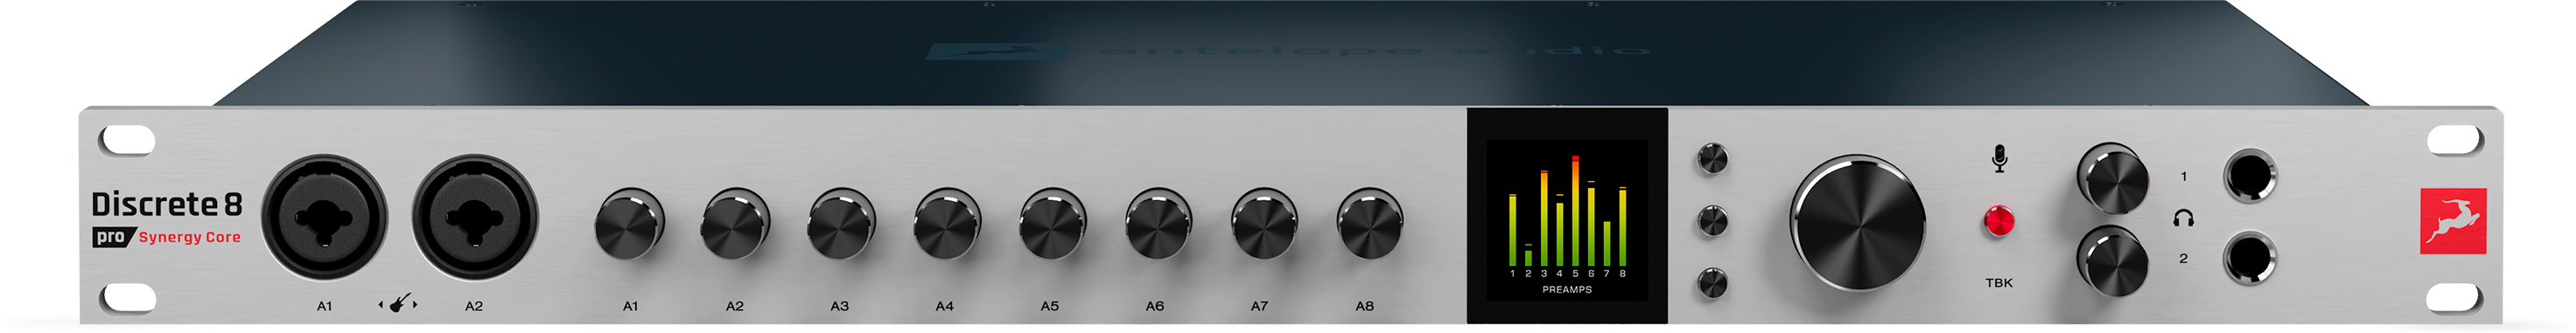 Antelope Audio Discrete 8 Pro Synergy Core - Thunderbolt audio-interface - Main picture